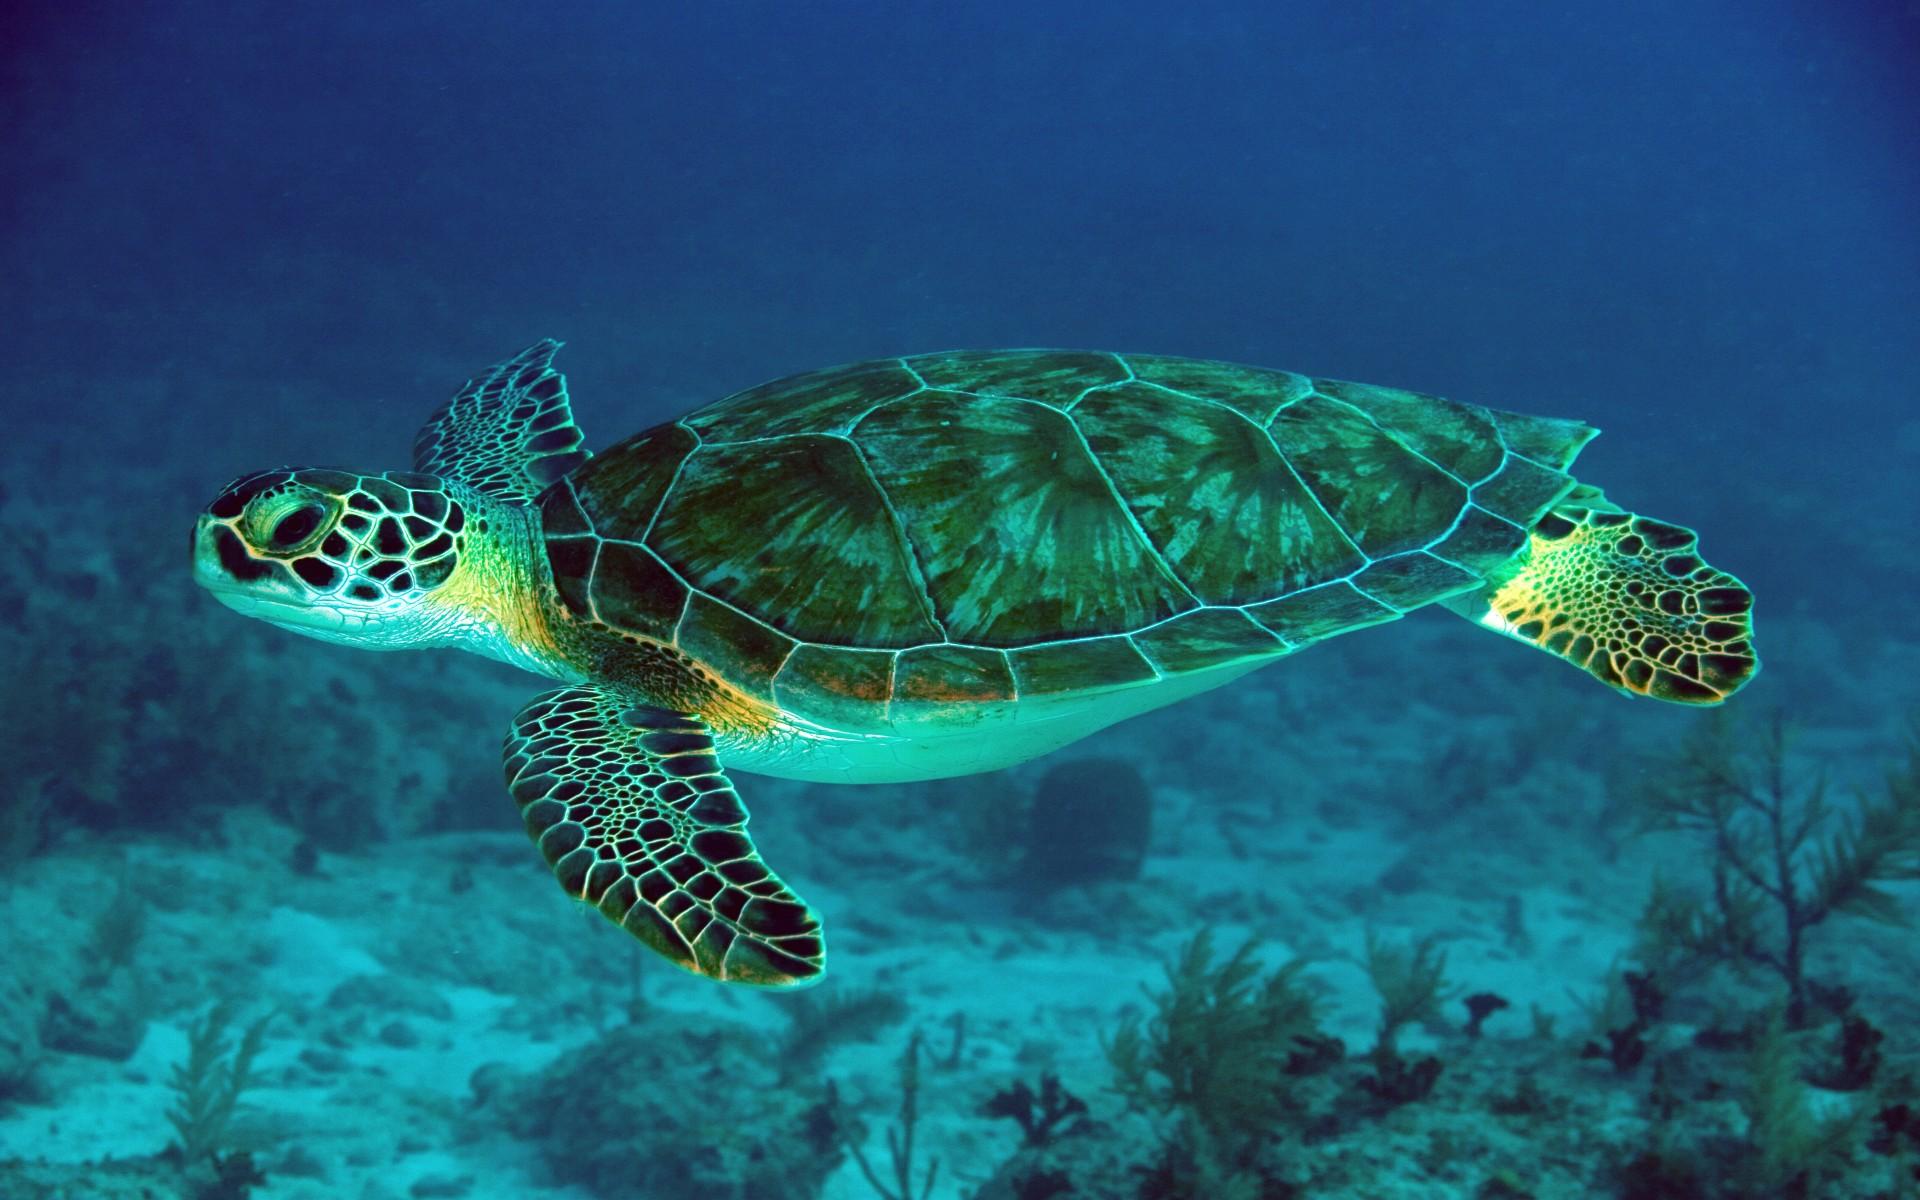 Green Sea Turtle Underwater Scene HD Wallpaper For Mobile Phones